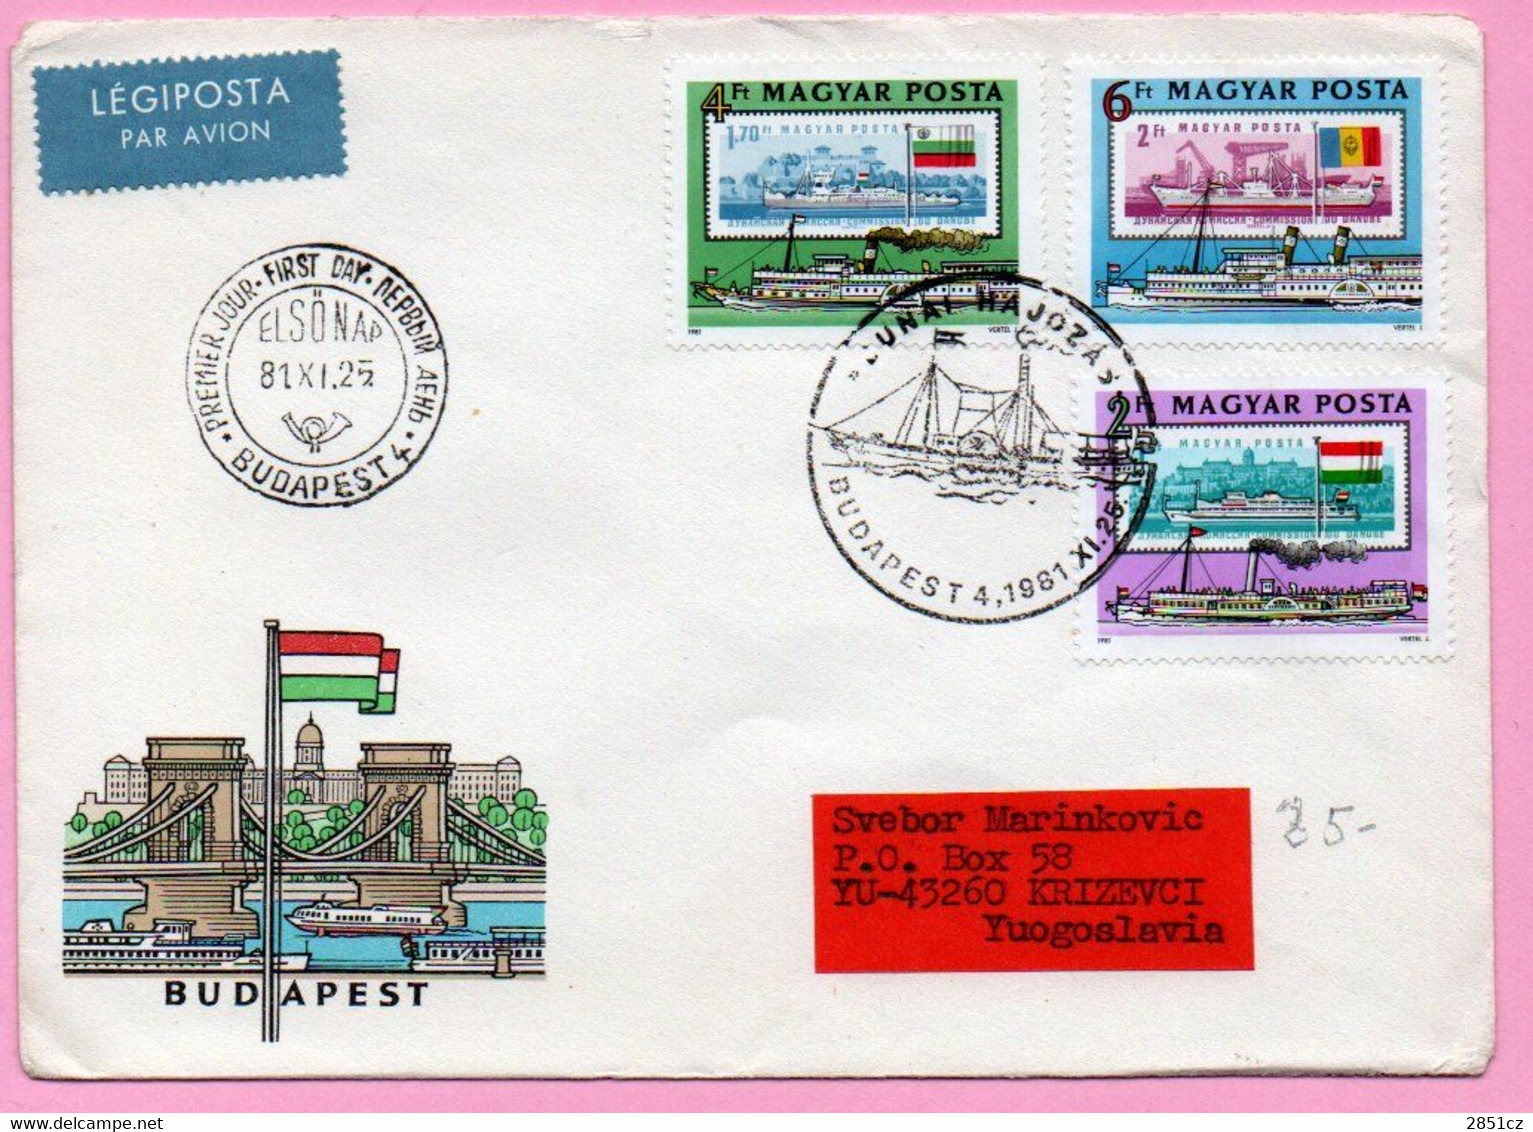 Letter - Stamp Ships / Postmark Premier Jour/First Day/Dunai Hajozas, Budapest, 1981., Hungary, Air Mail - Lettres & Documents